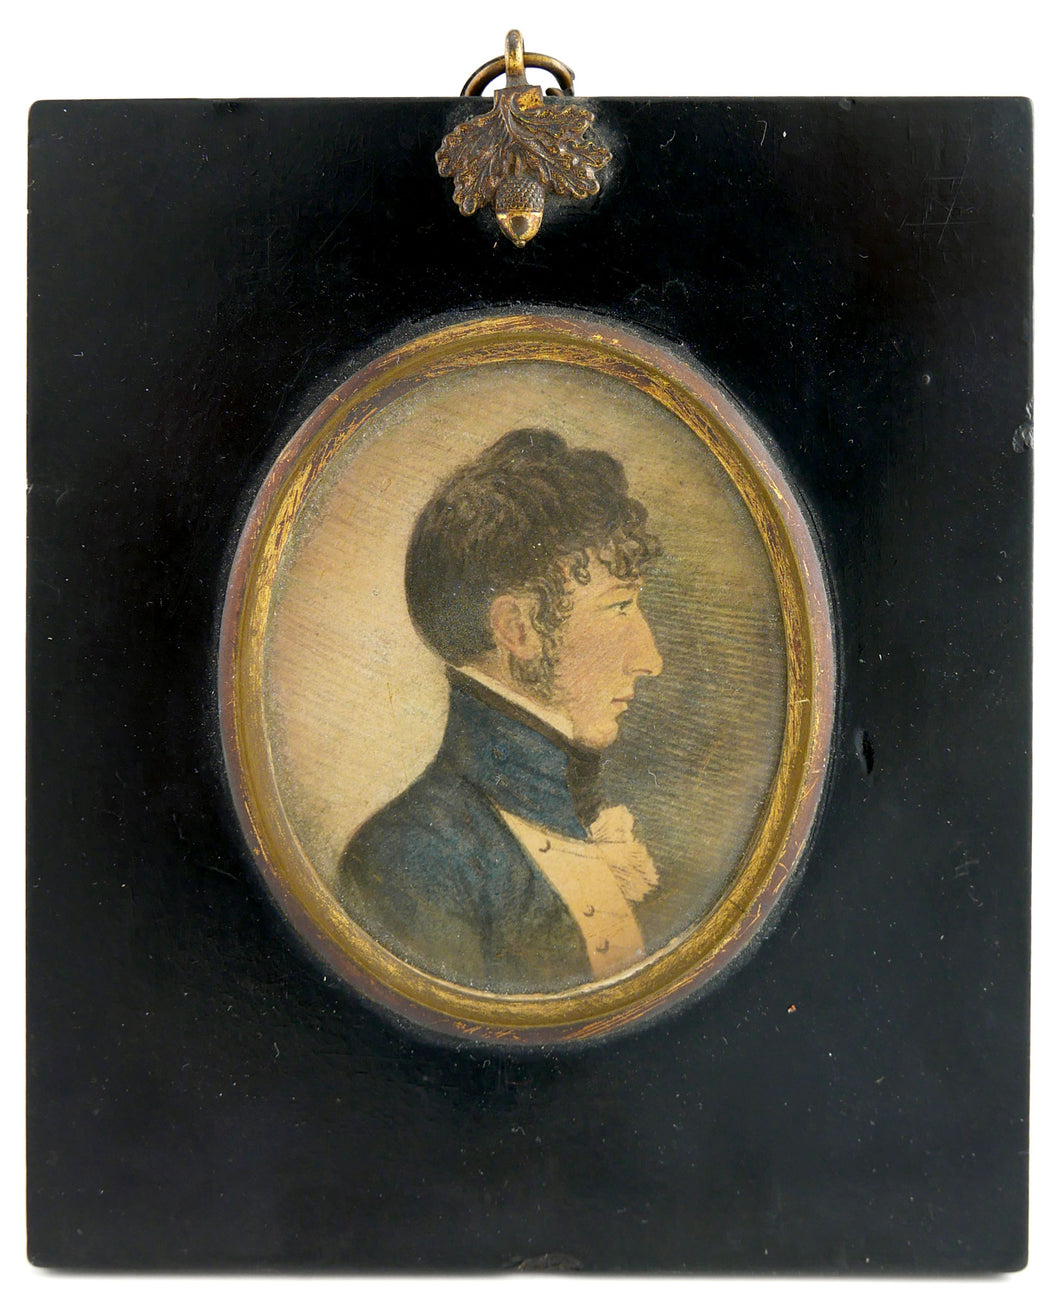 Portrait Miniature of Trafalgar Officer - Lieutenant Benjamin Patey, R.N.,1805